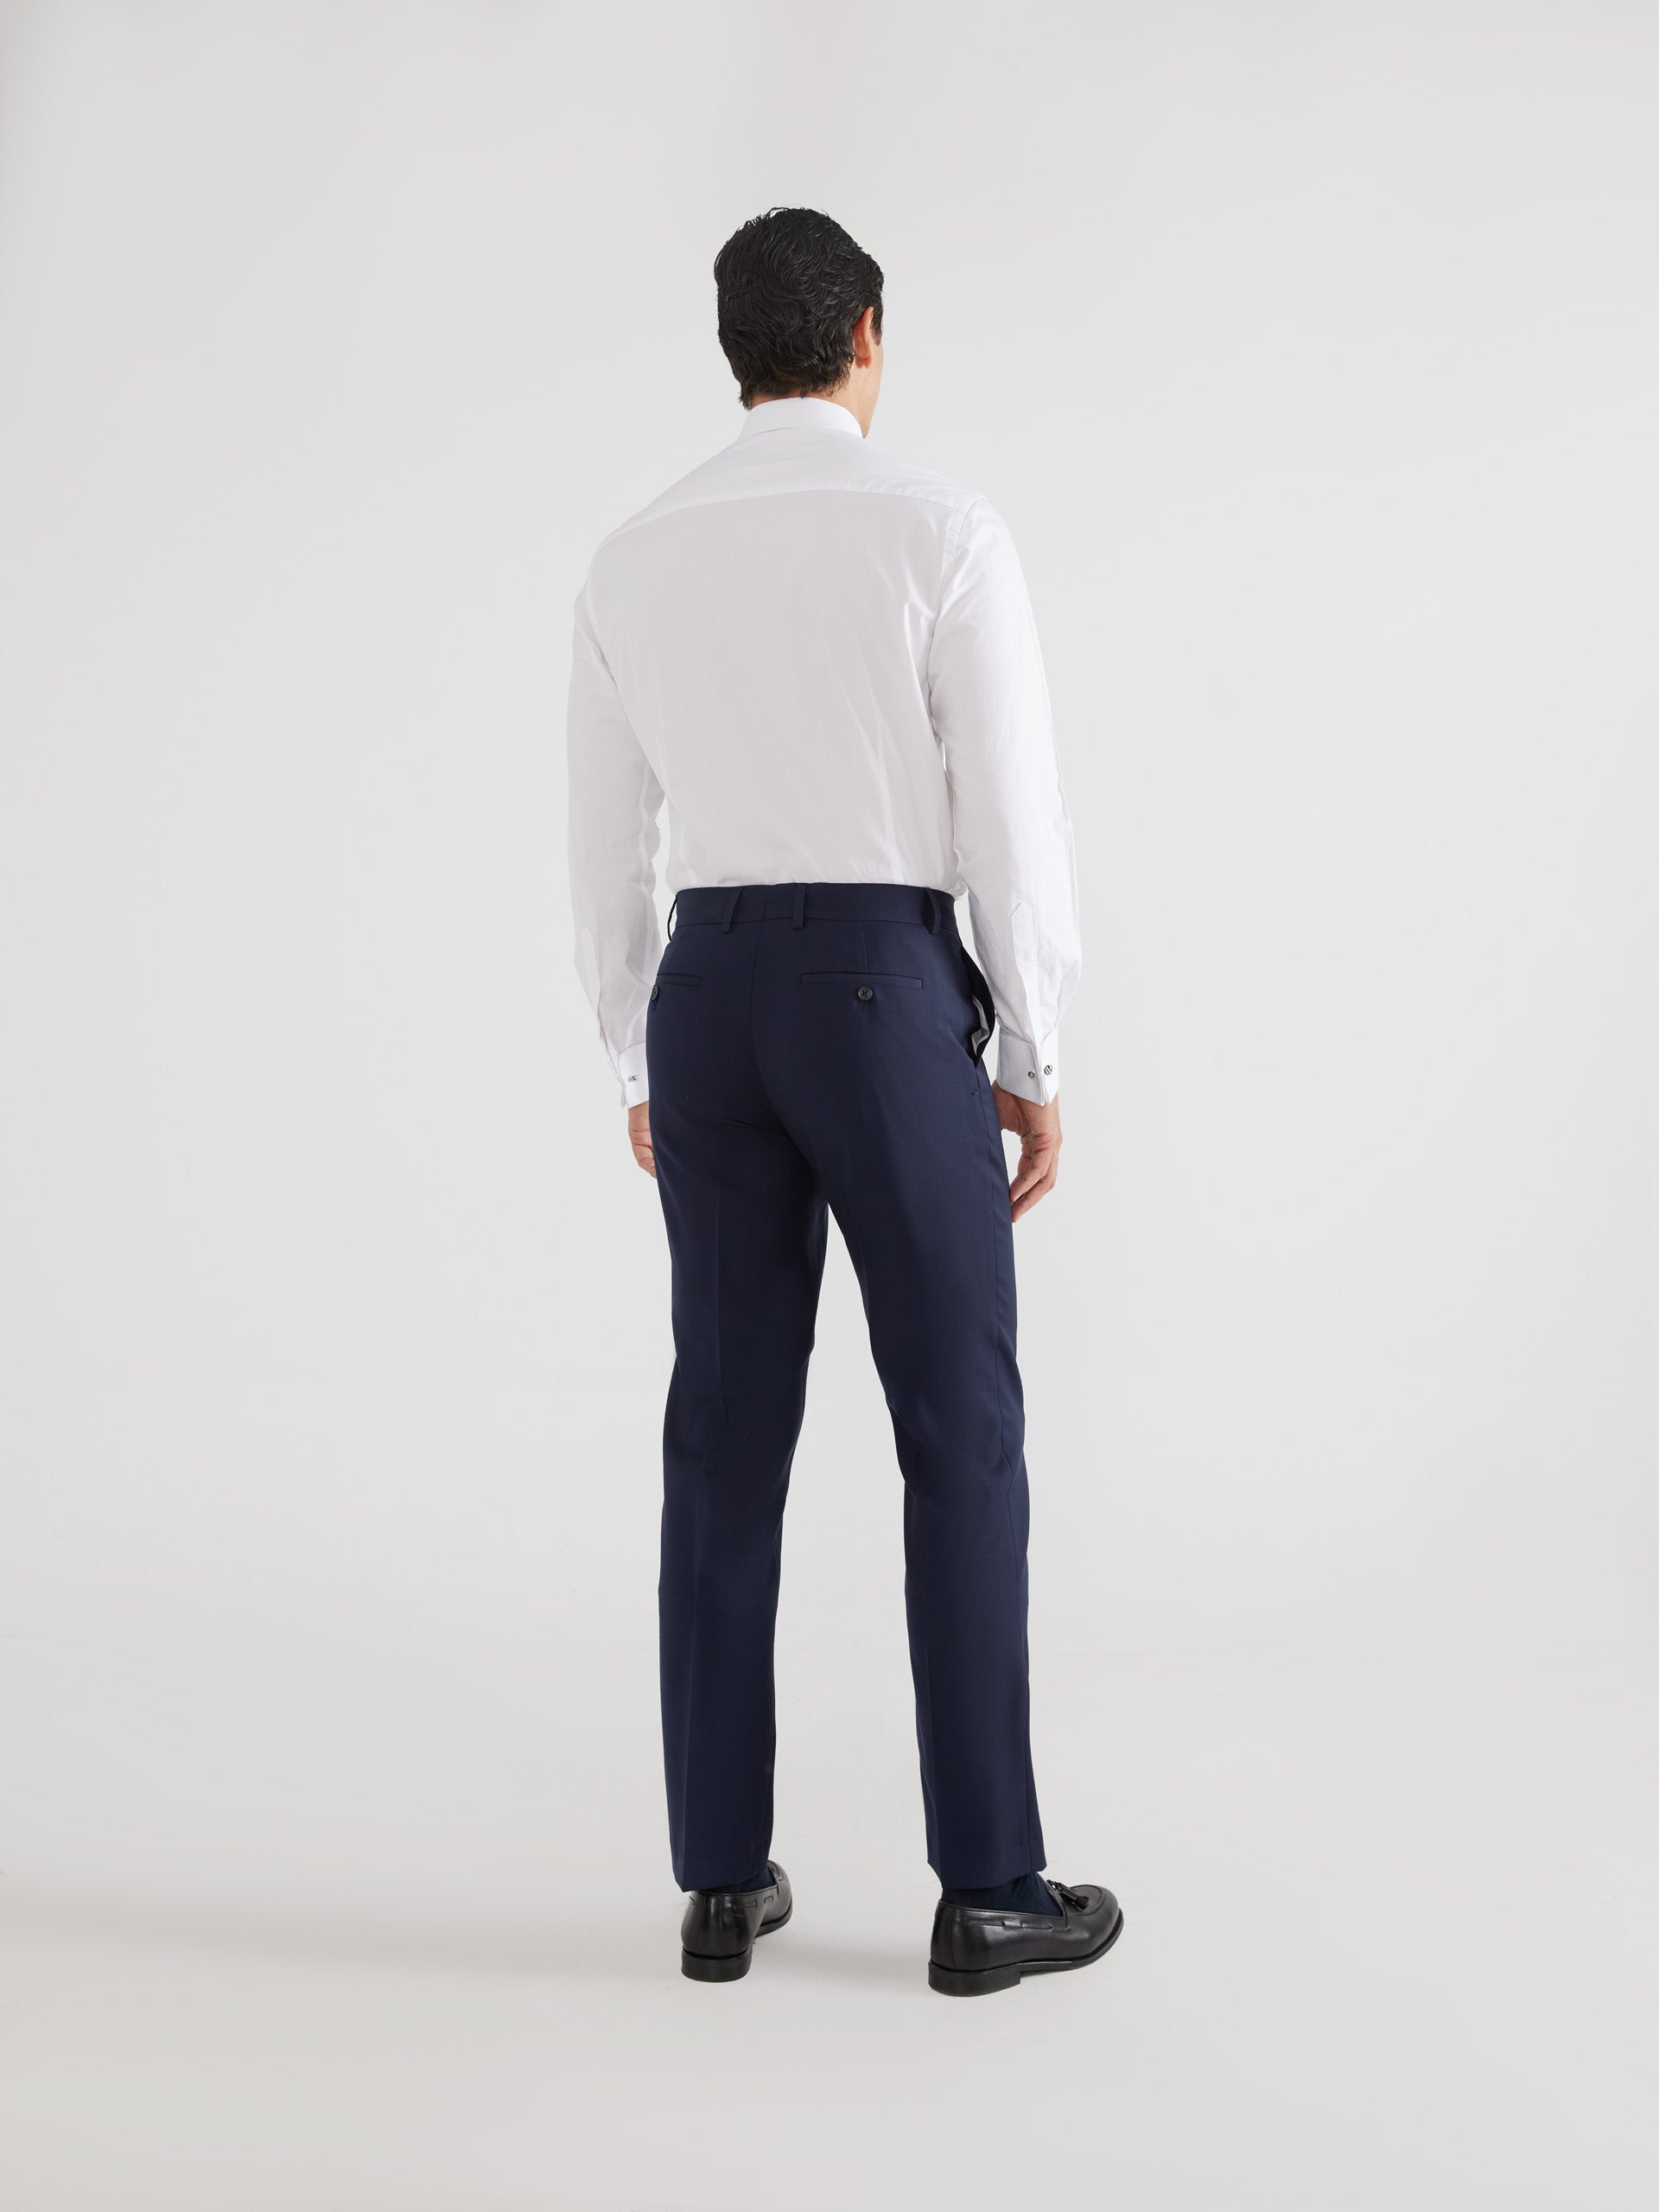 Pantalon traje natural stretch azul marino